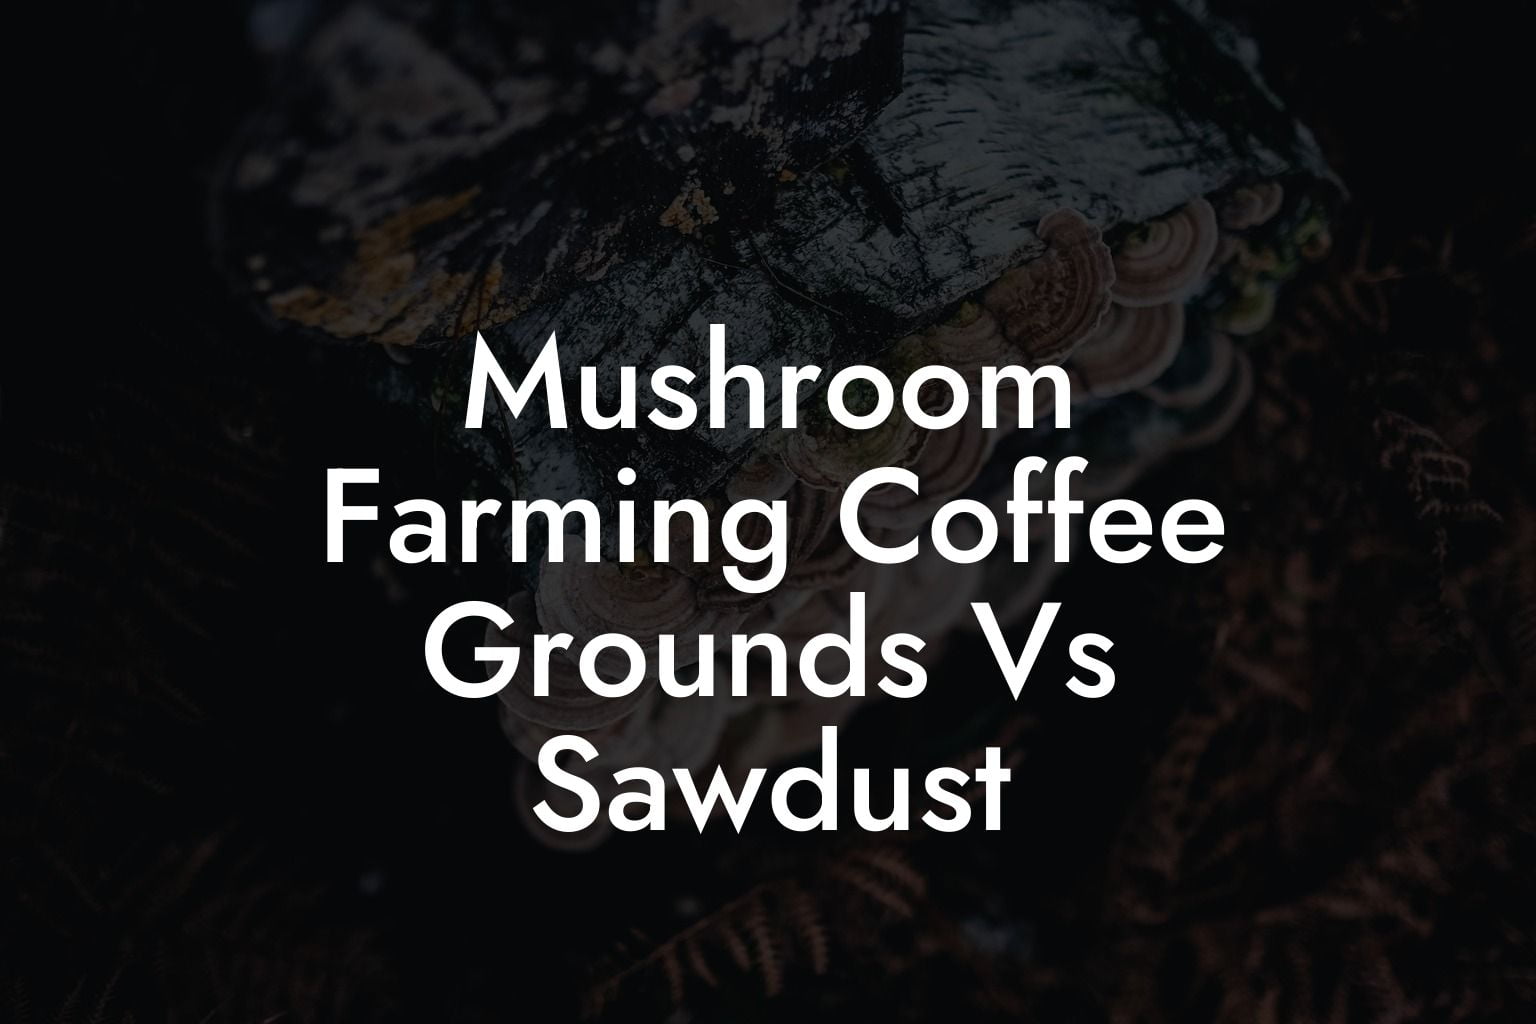 Mushroom Farming Coffee Grounds Vs Sawdust